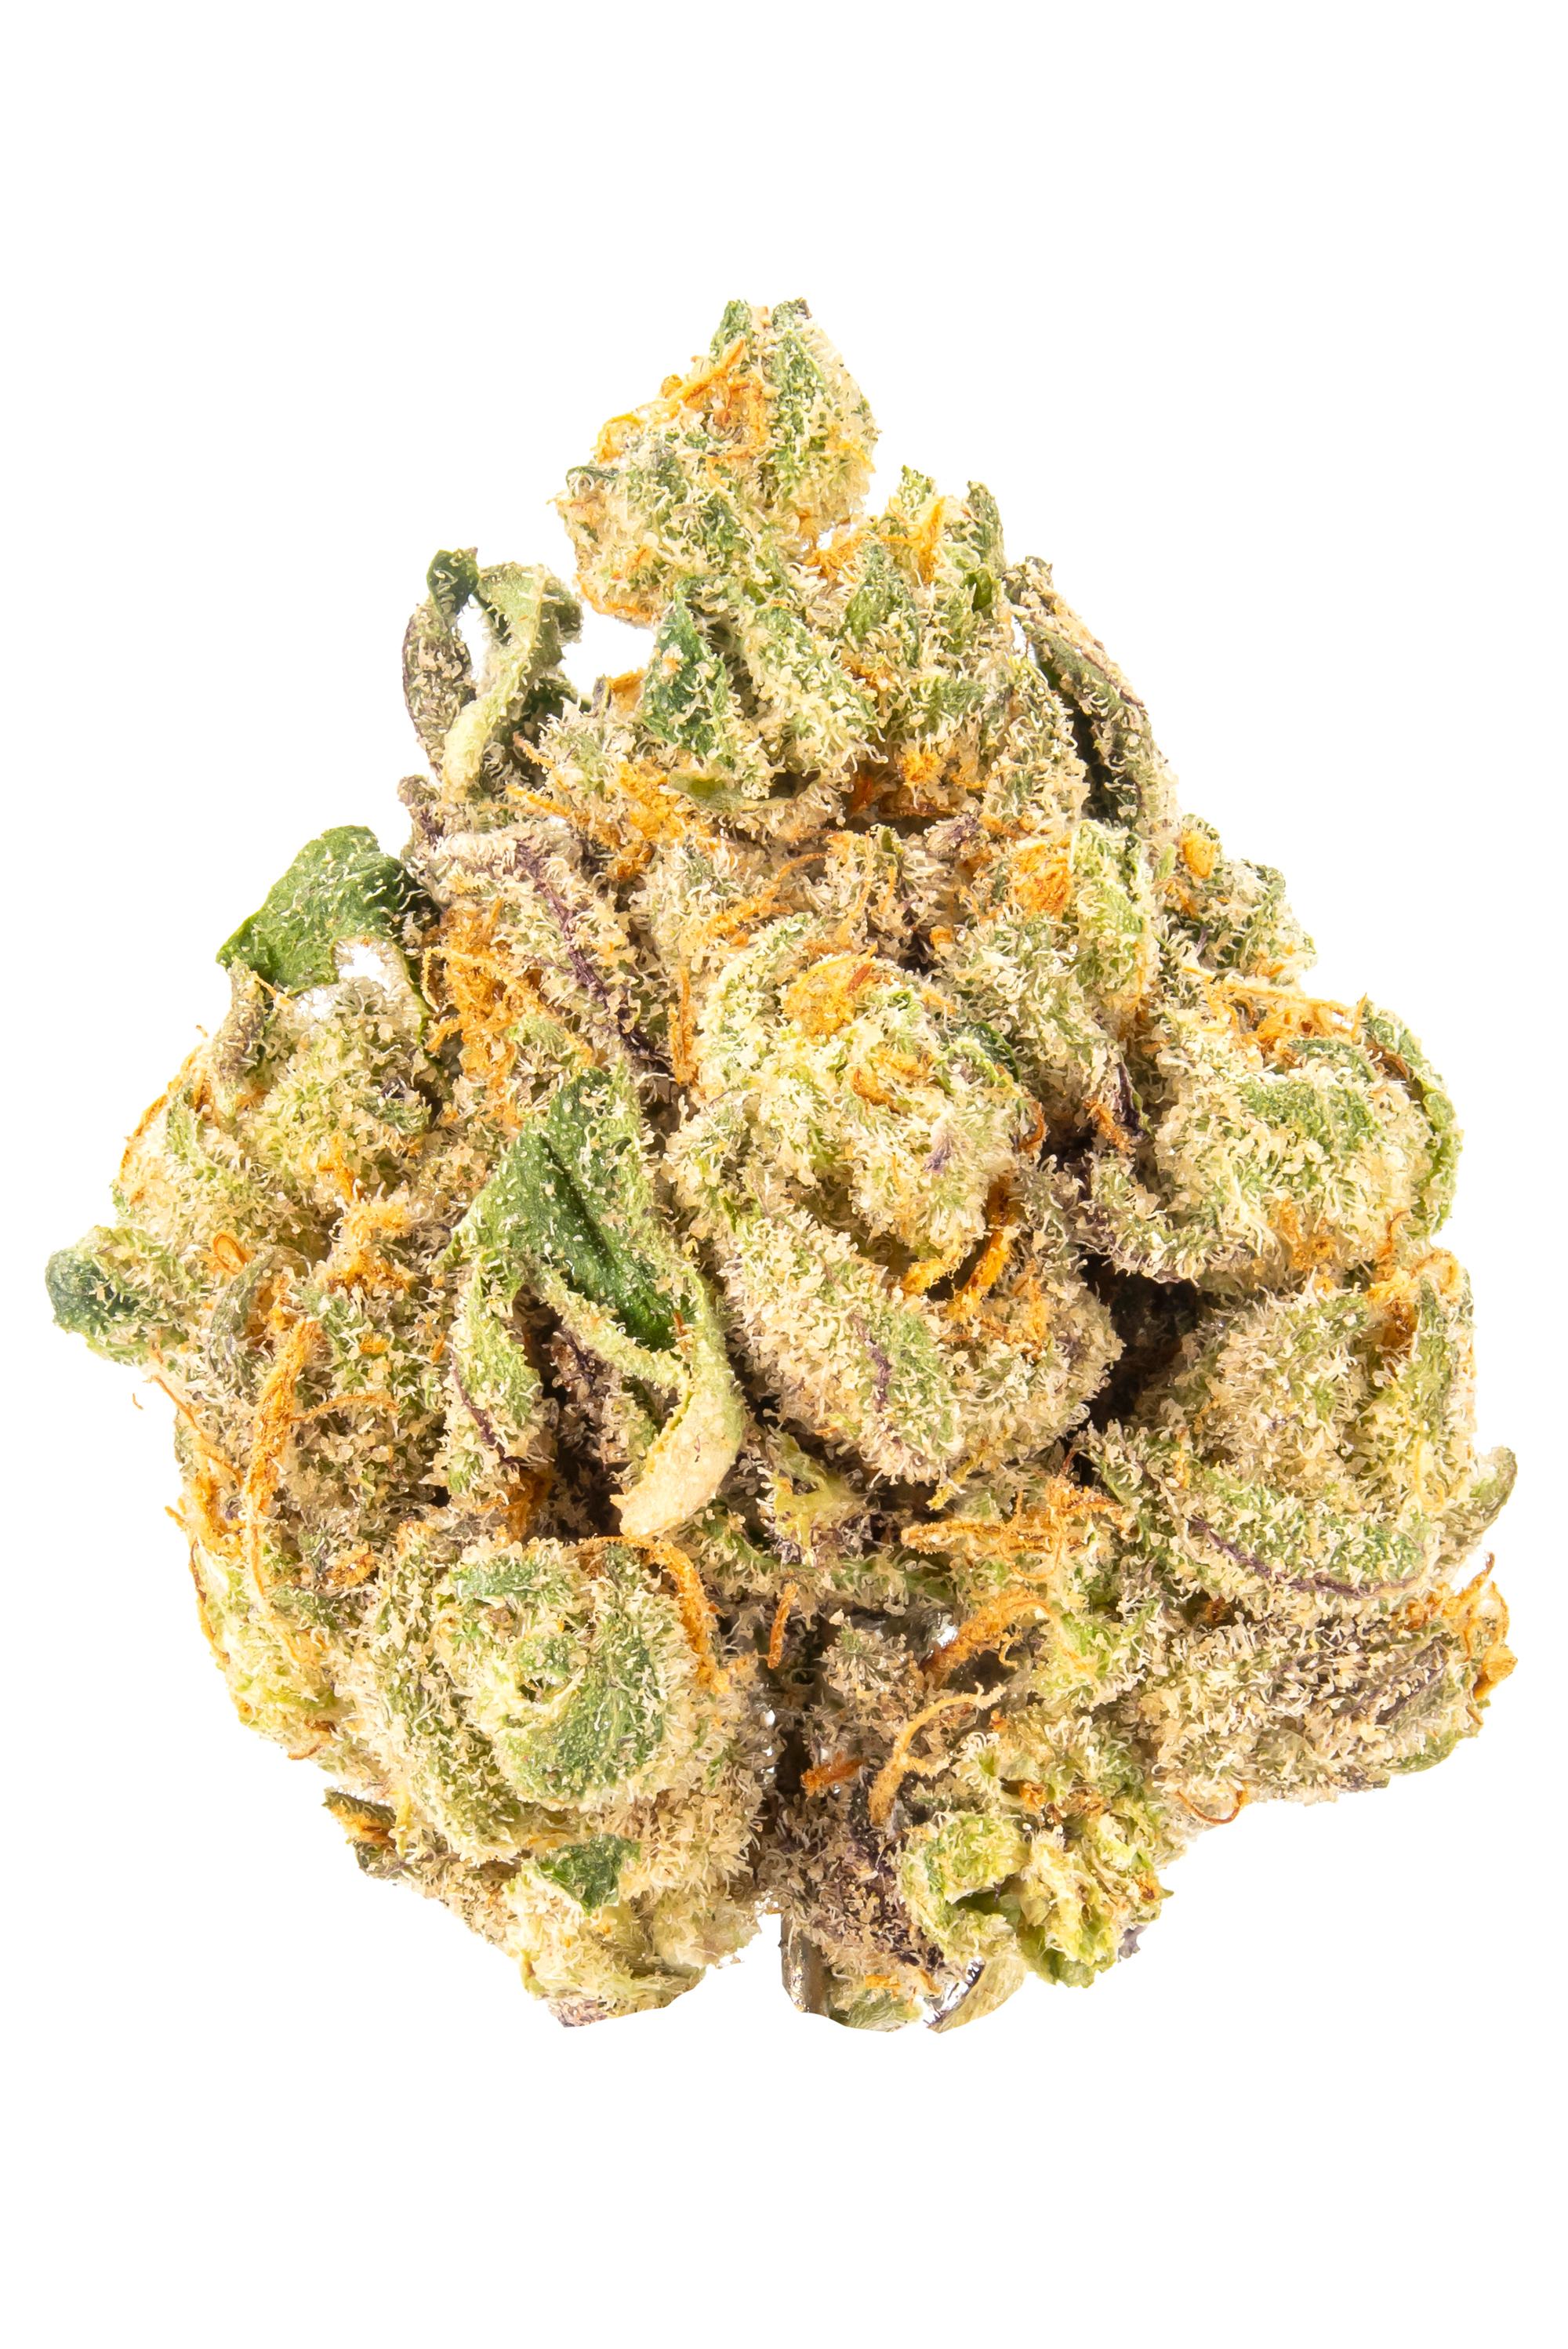 Miami Vice - Hybrid Cannabis Strain